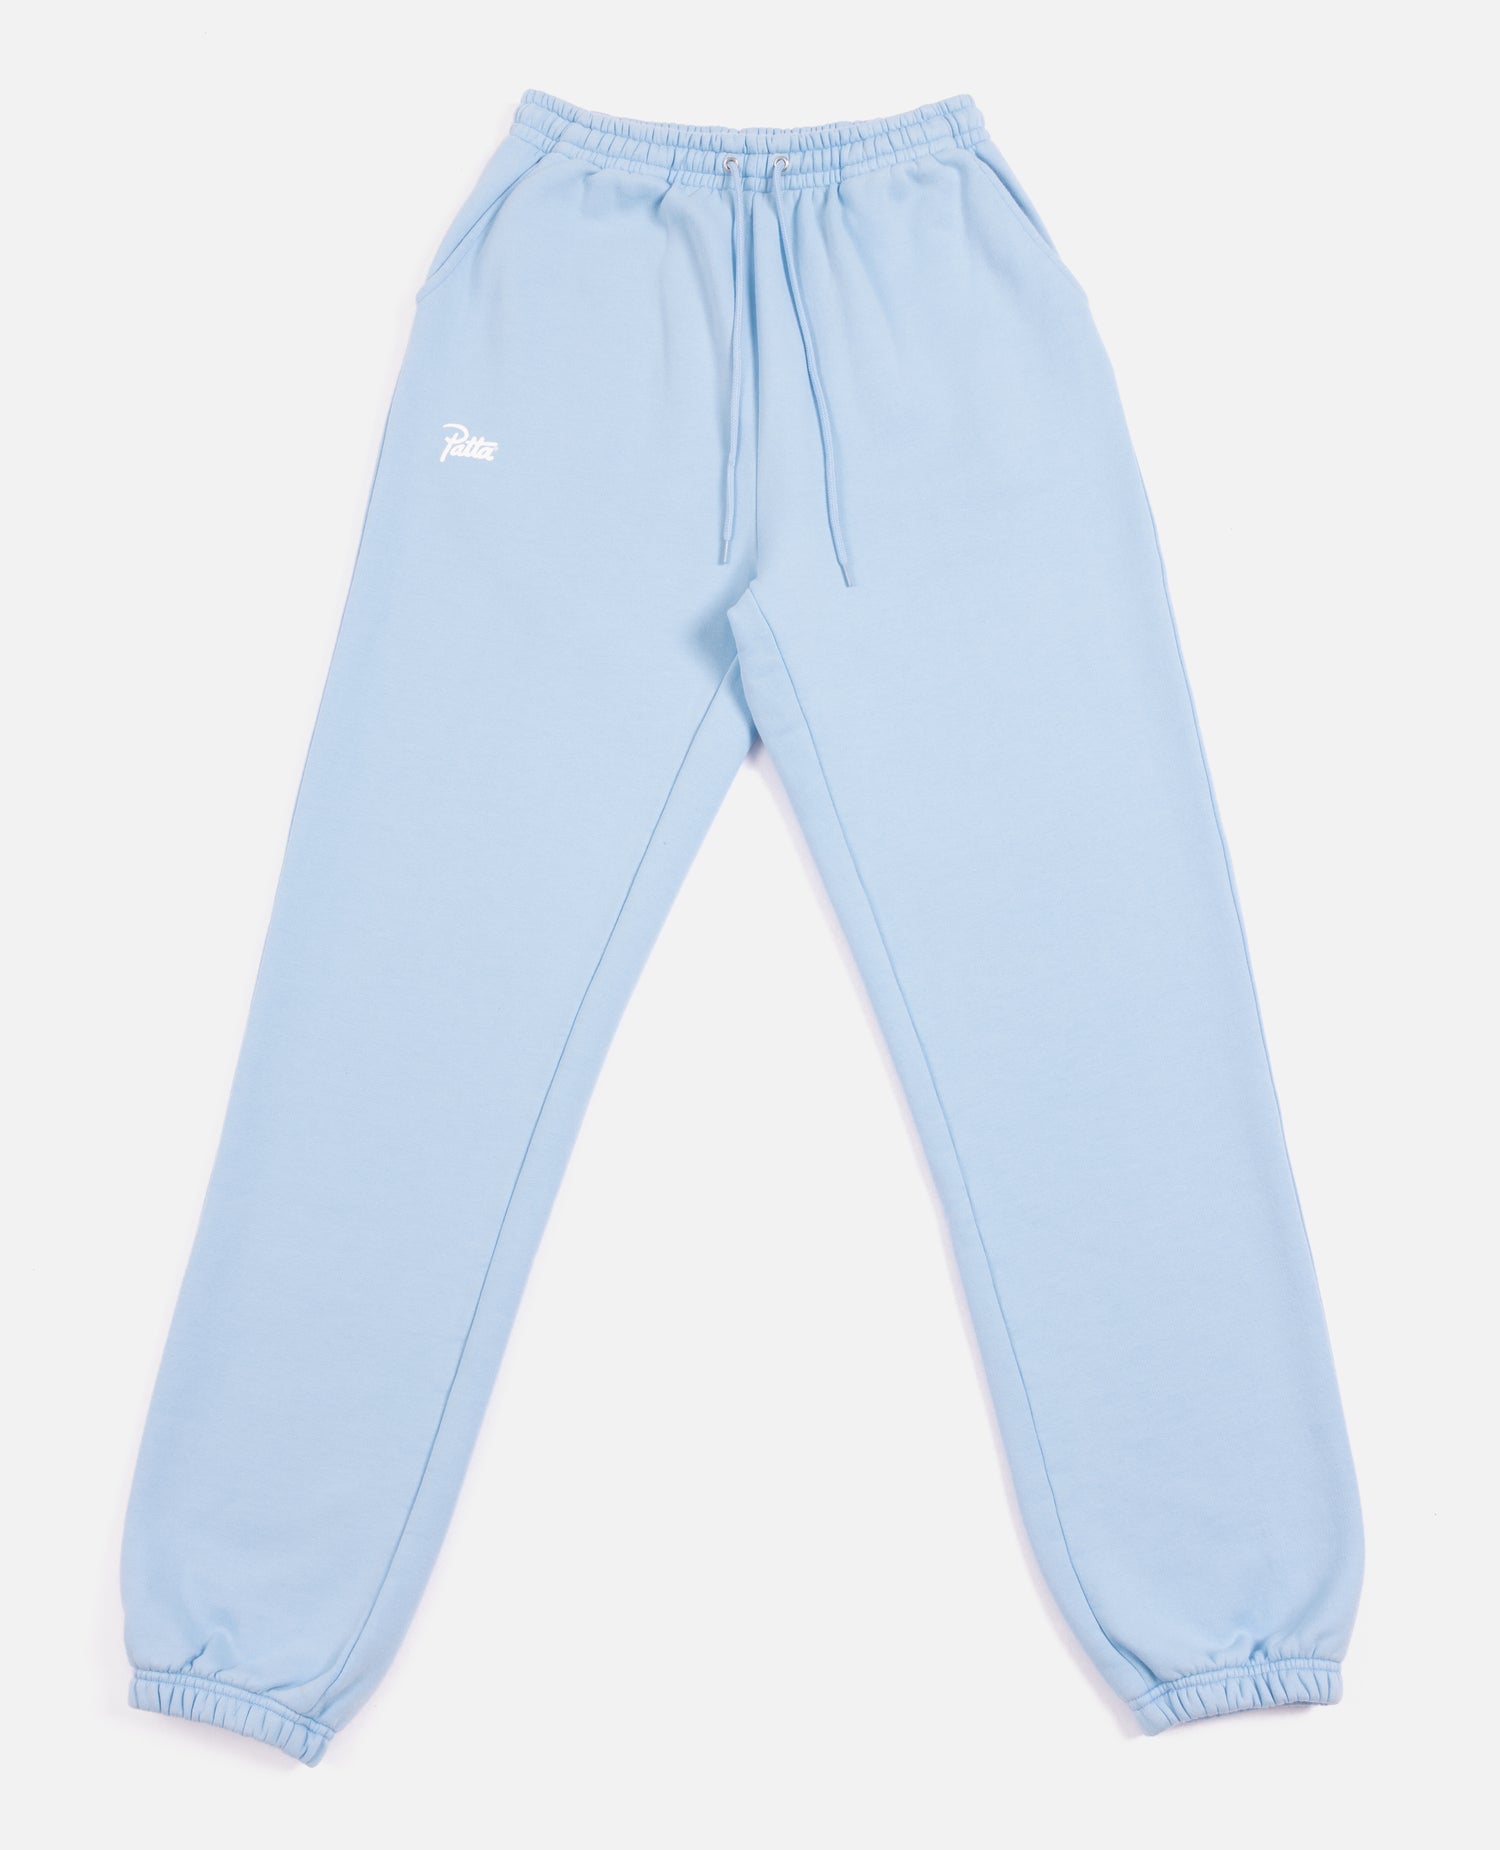 Patta Femme Basic Jogging Pants (Blue Bell)